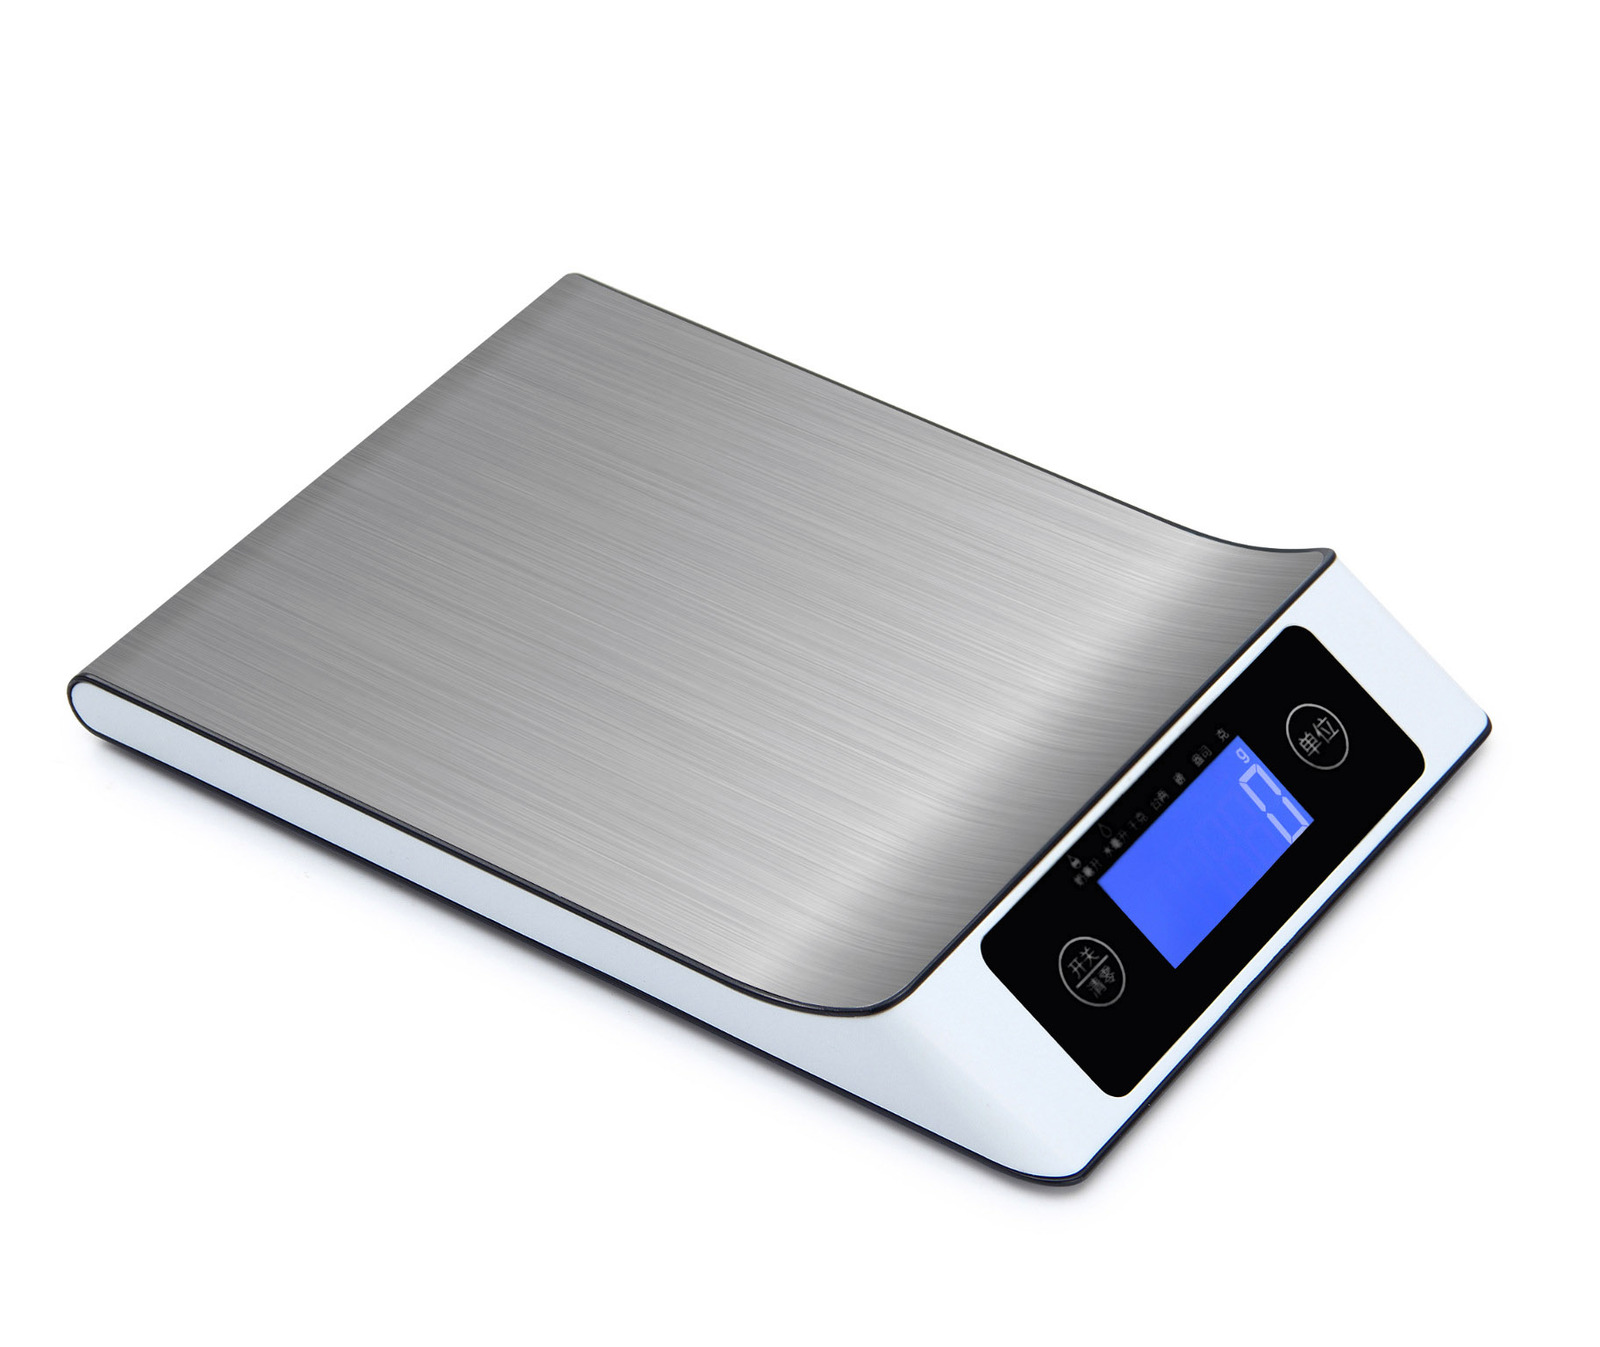 15kg Digital Precision Kitchen Postal Platform Scale Stainless Steel